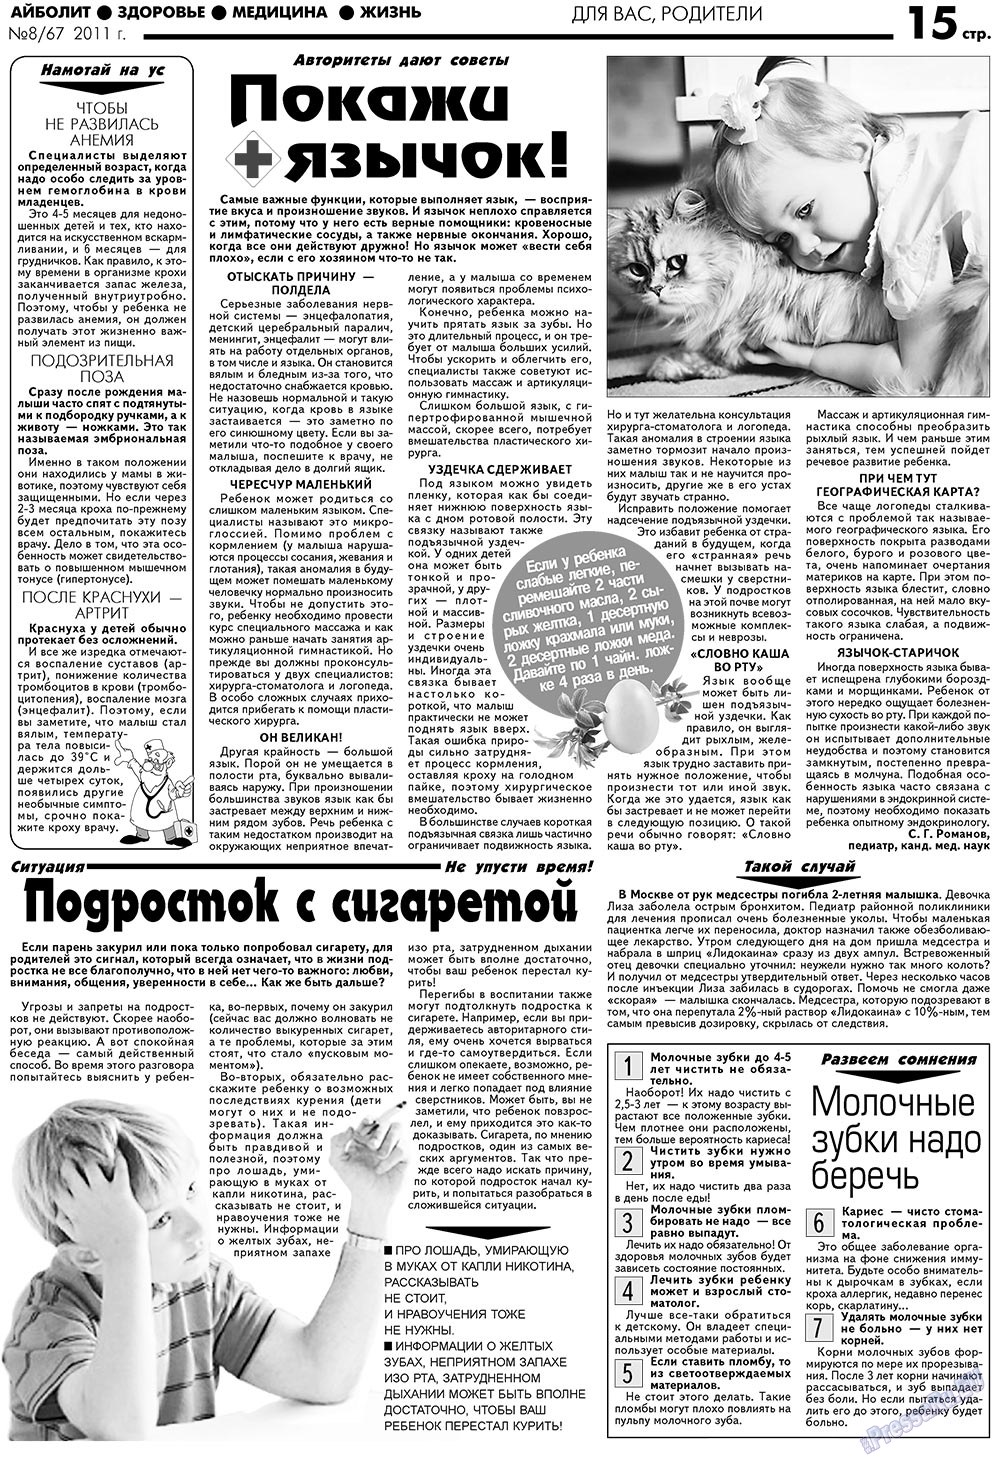 АйБолит (газета). 2011 год, номер 8, стр. 15